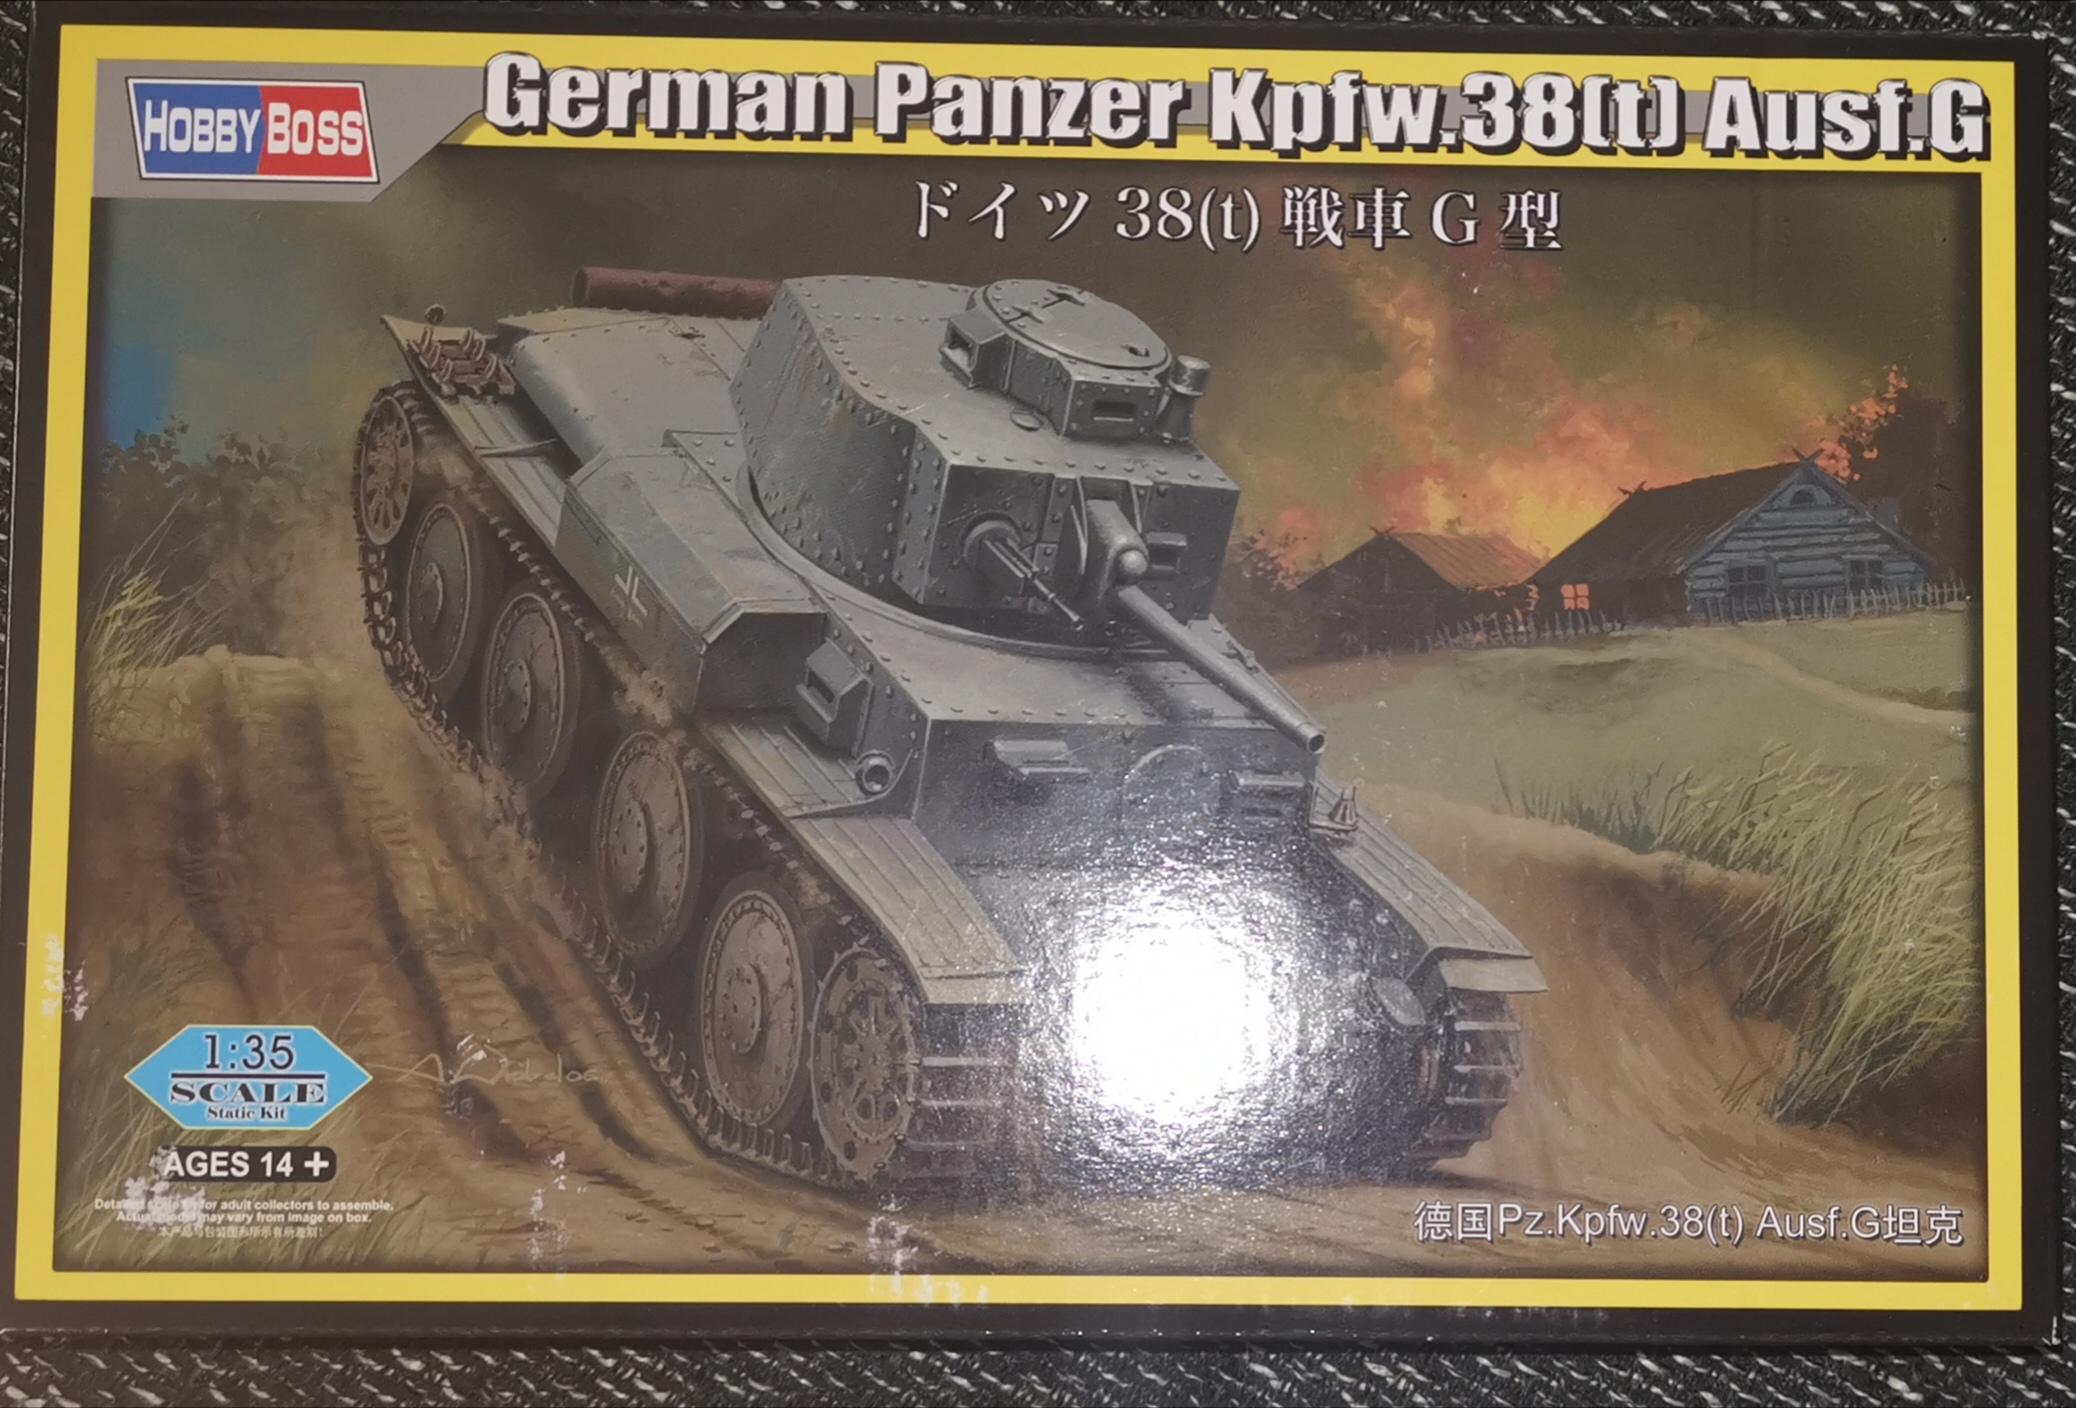 IMG_20191004_121229

Hobby Boss Panzer 38G  5.000 Ft